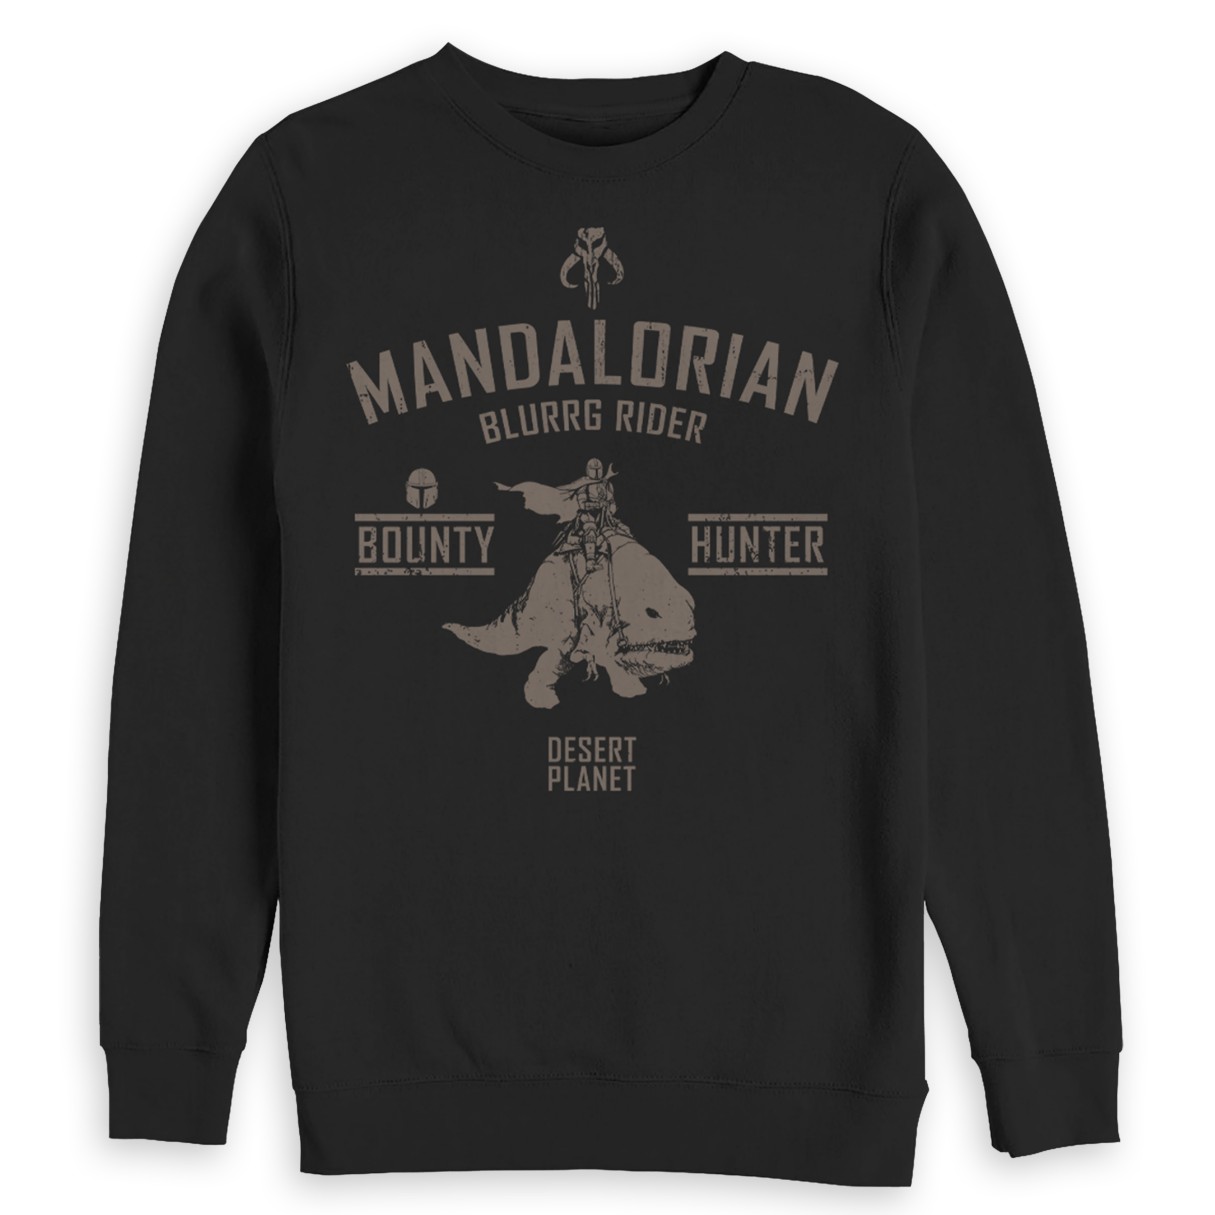 Mandalorian ''Blurrg Rider'' Pullover Sweatshirt for Adults – Star Wars